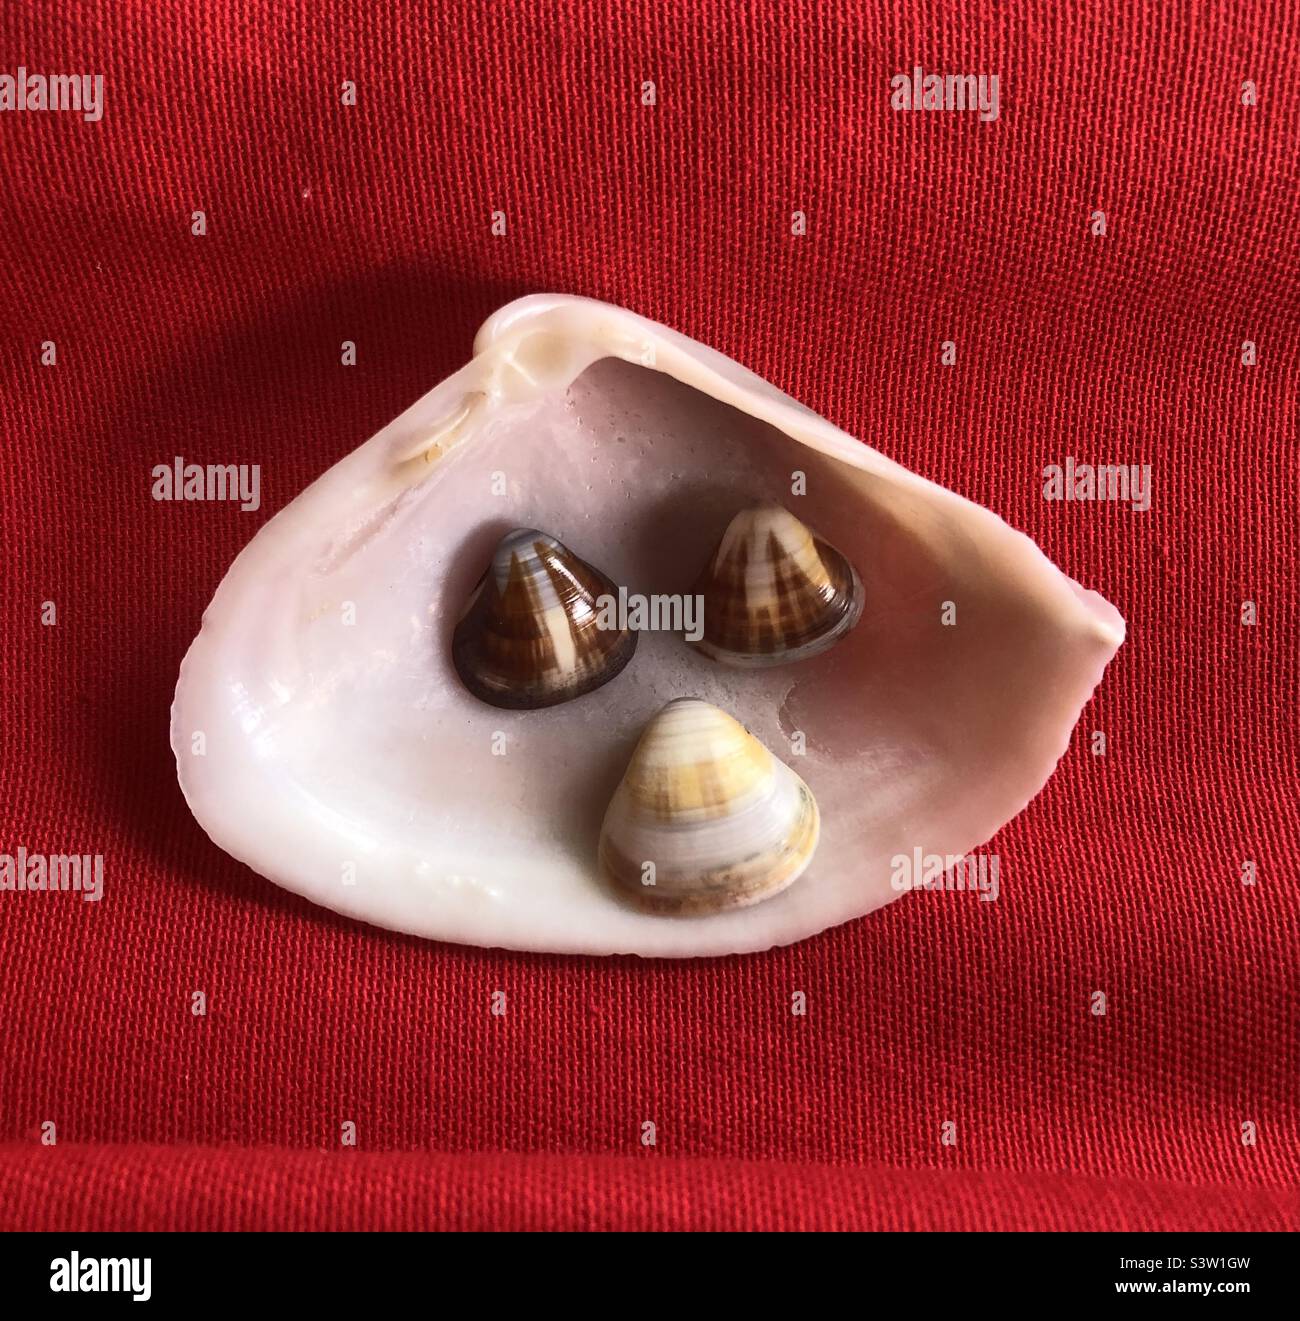 A smiling seashell. Stock Photo